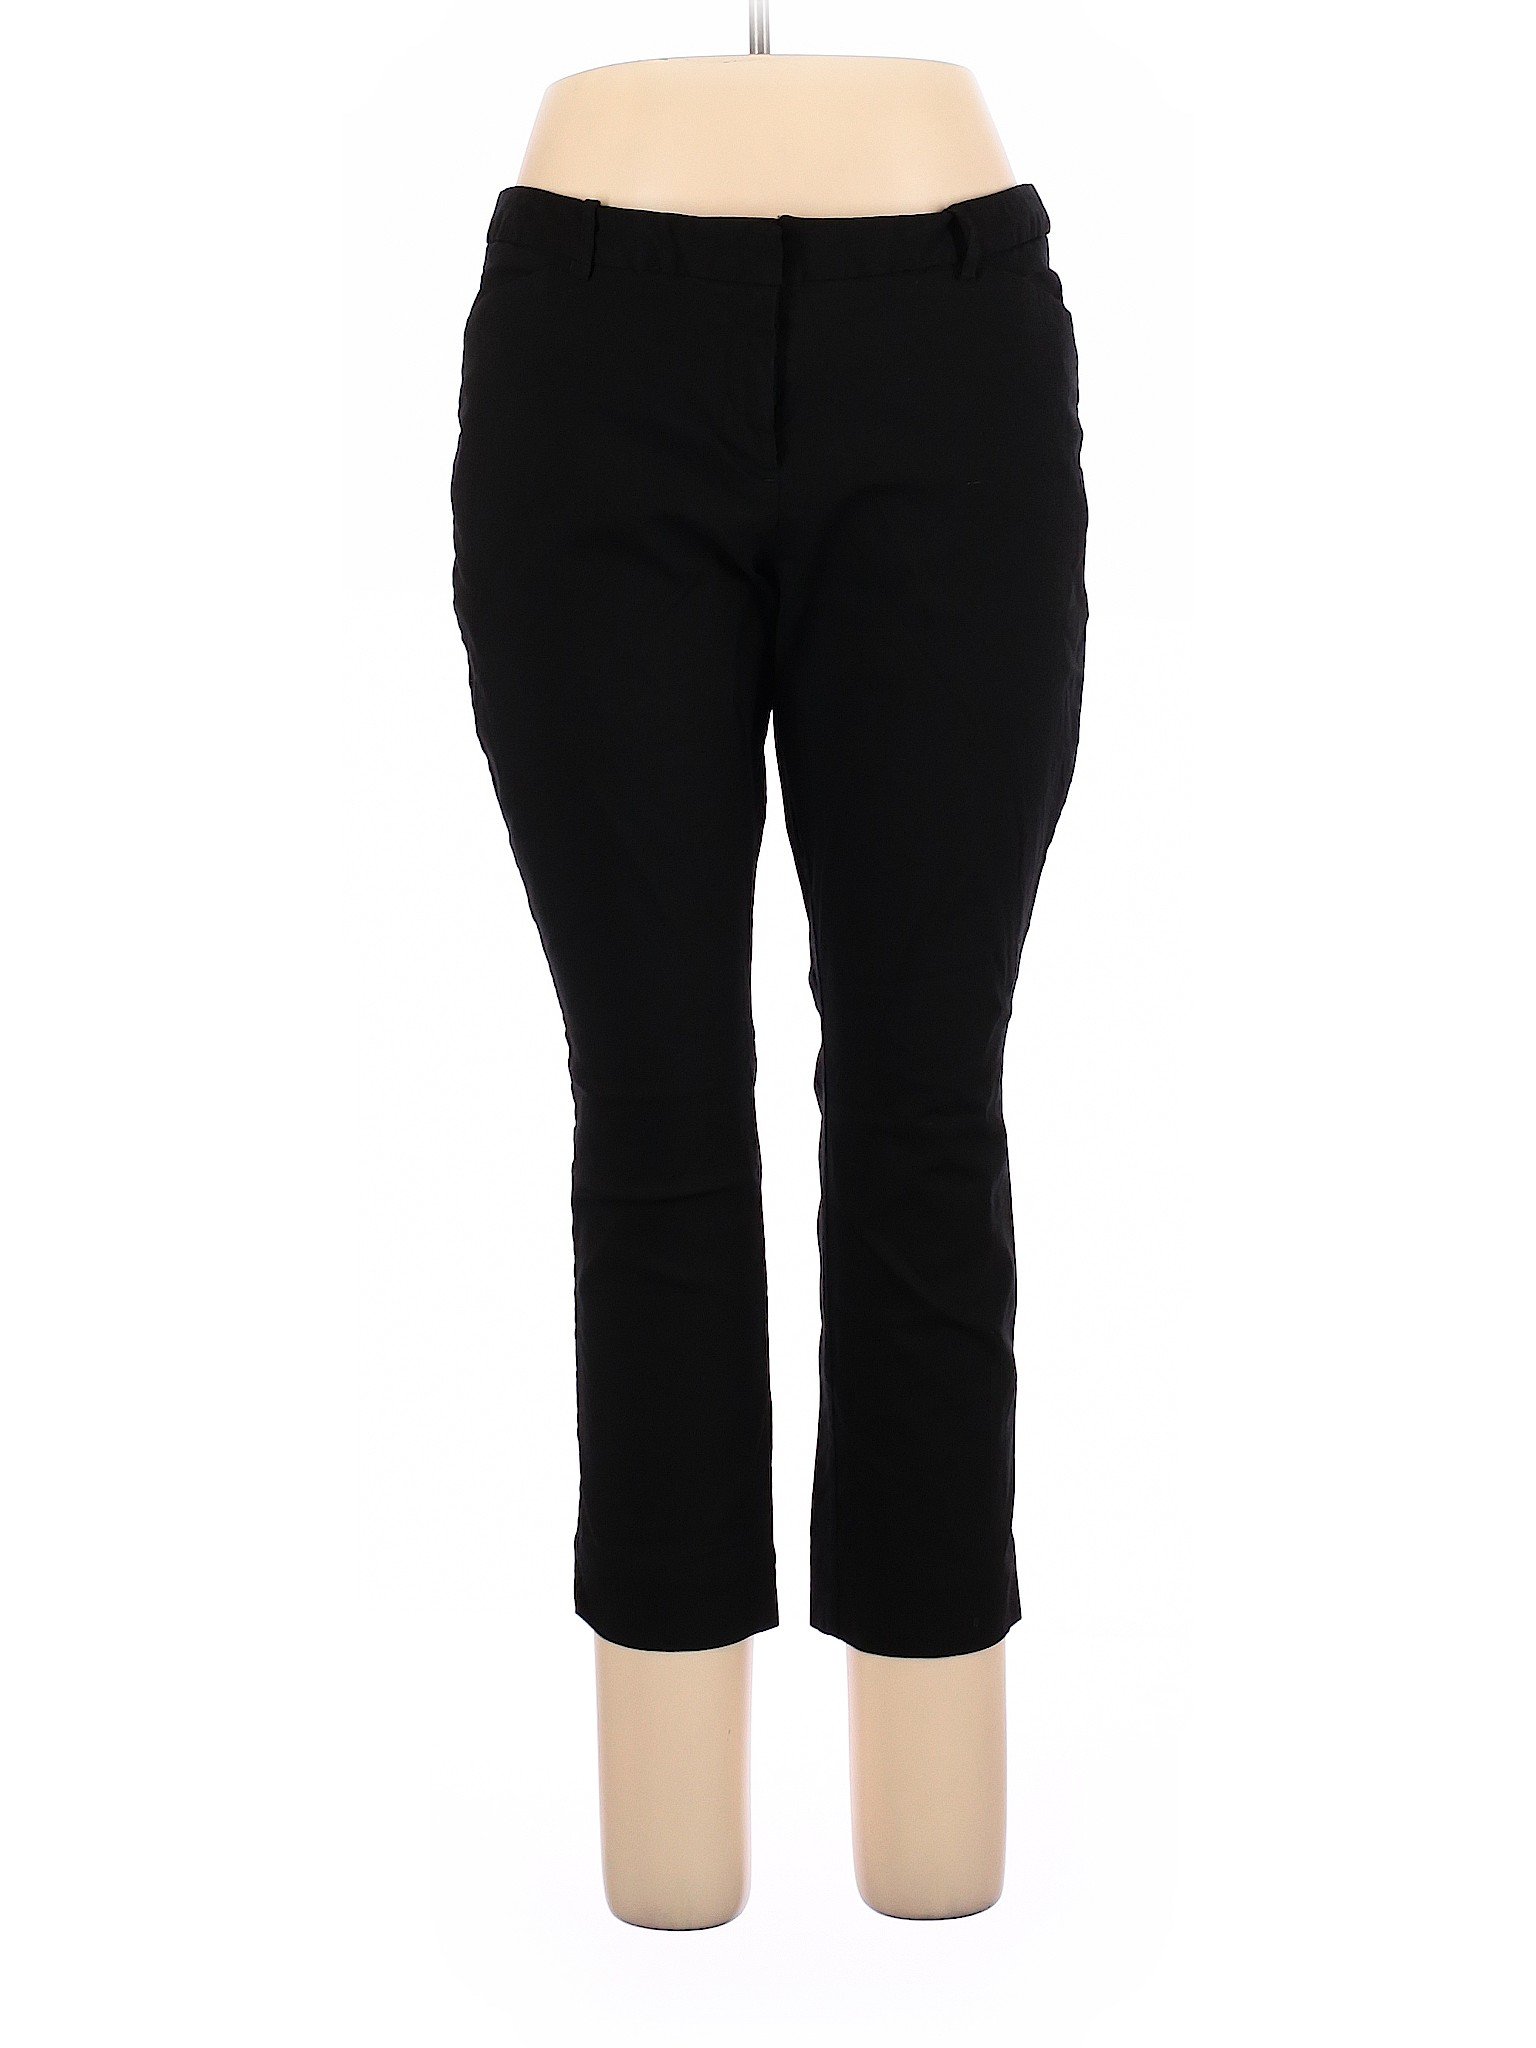 Worthington Women Black Dress Pants 16 Petites | eBay